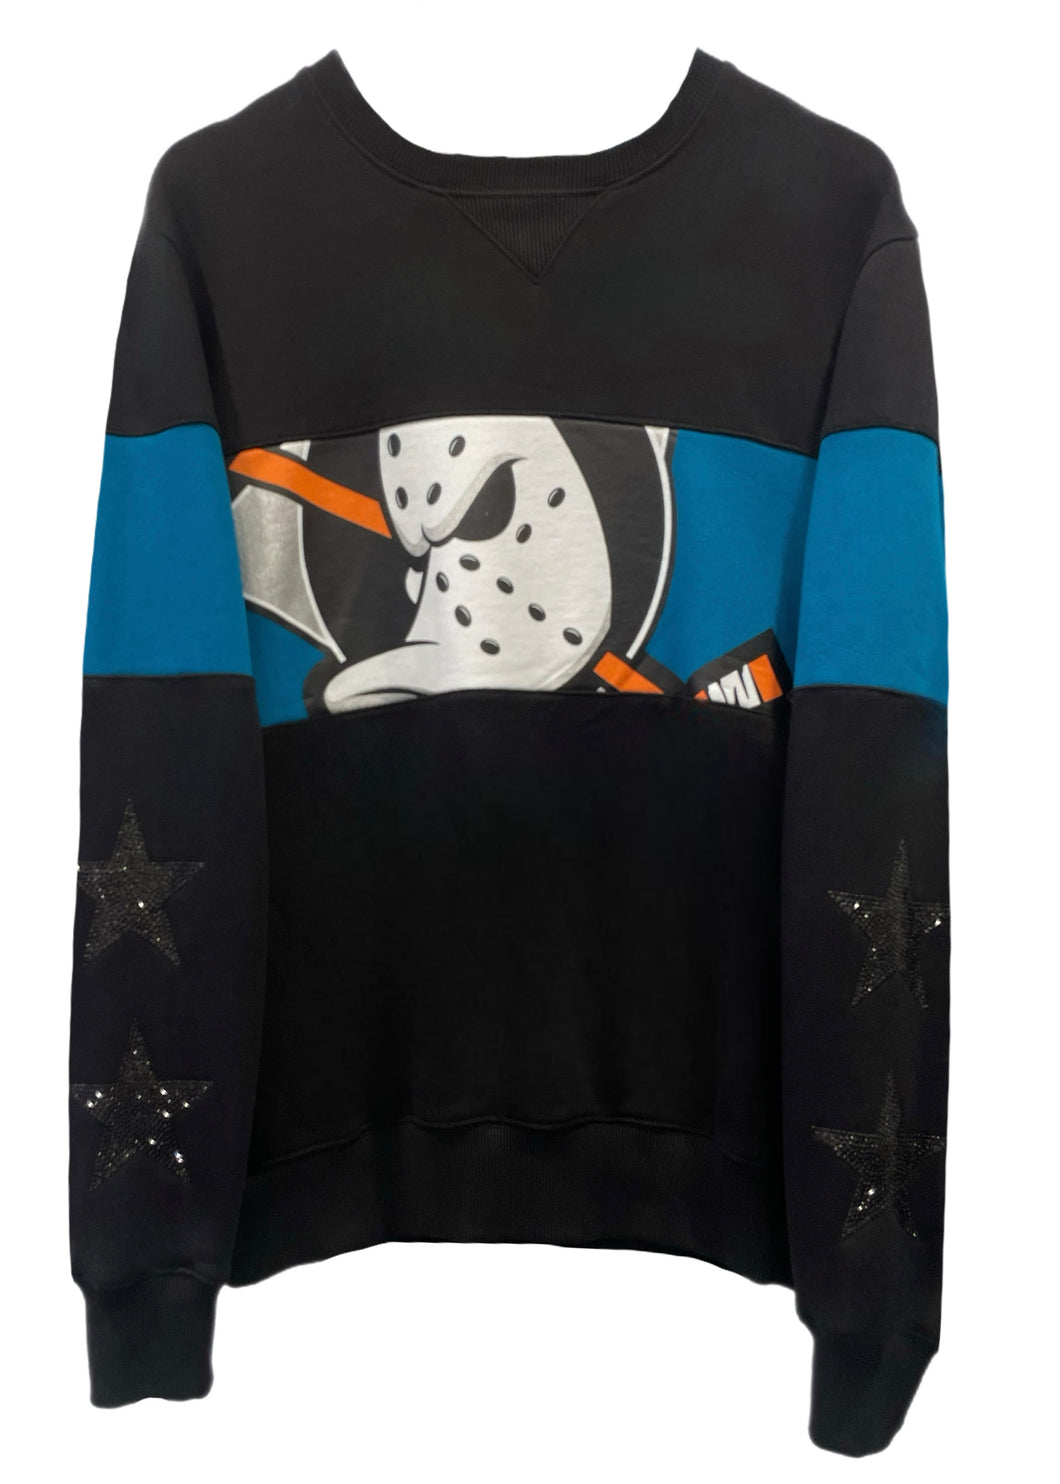 Anaheim Ducks, Hockey One of a KIND Vintage “Mighty Ducks” Rare Find Sweatshirt with Black Crystal Star Design